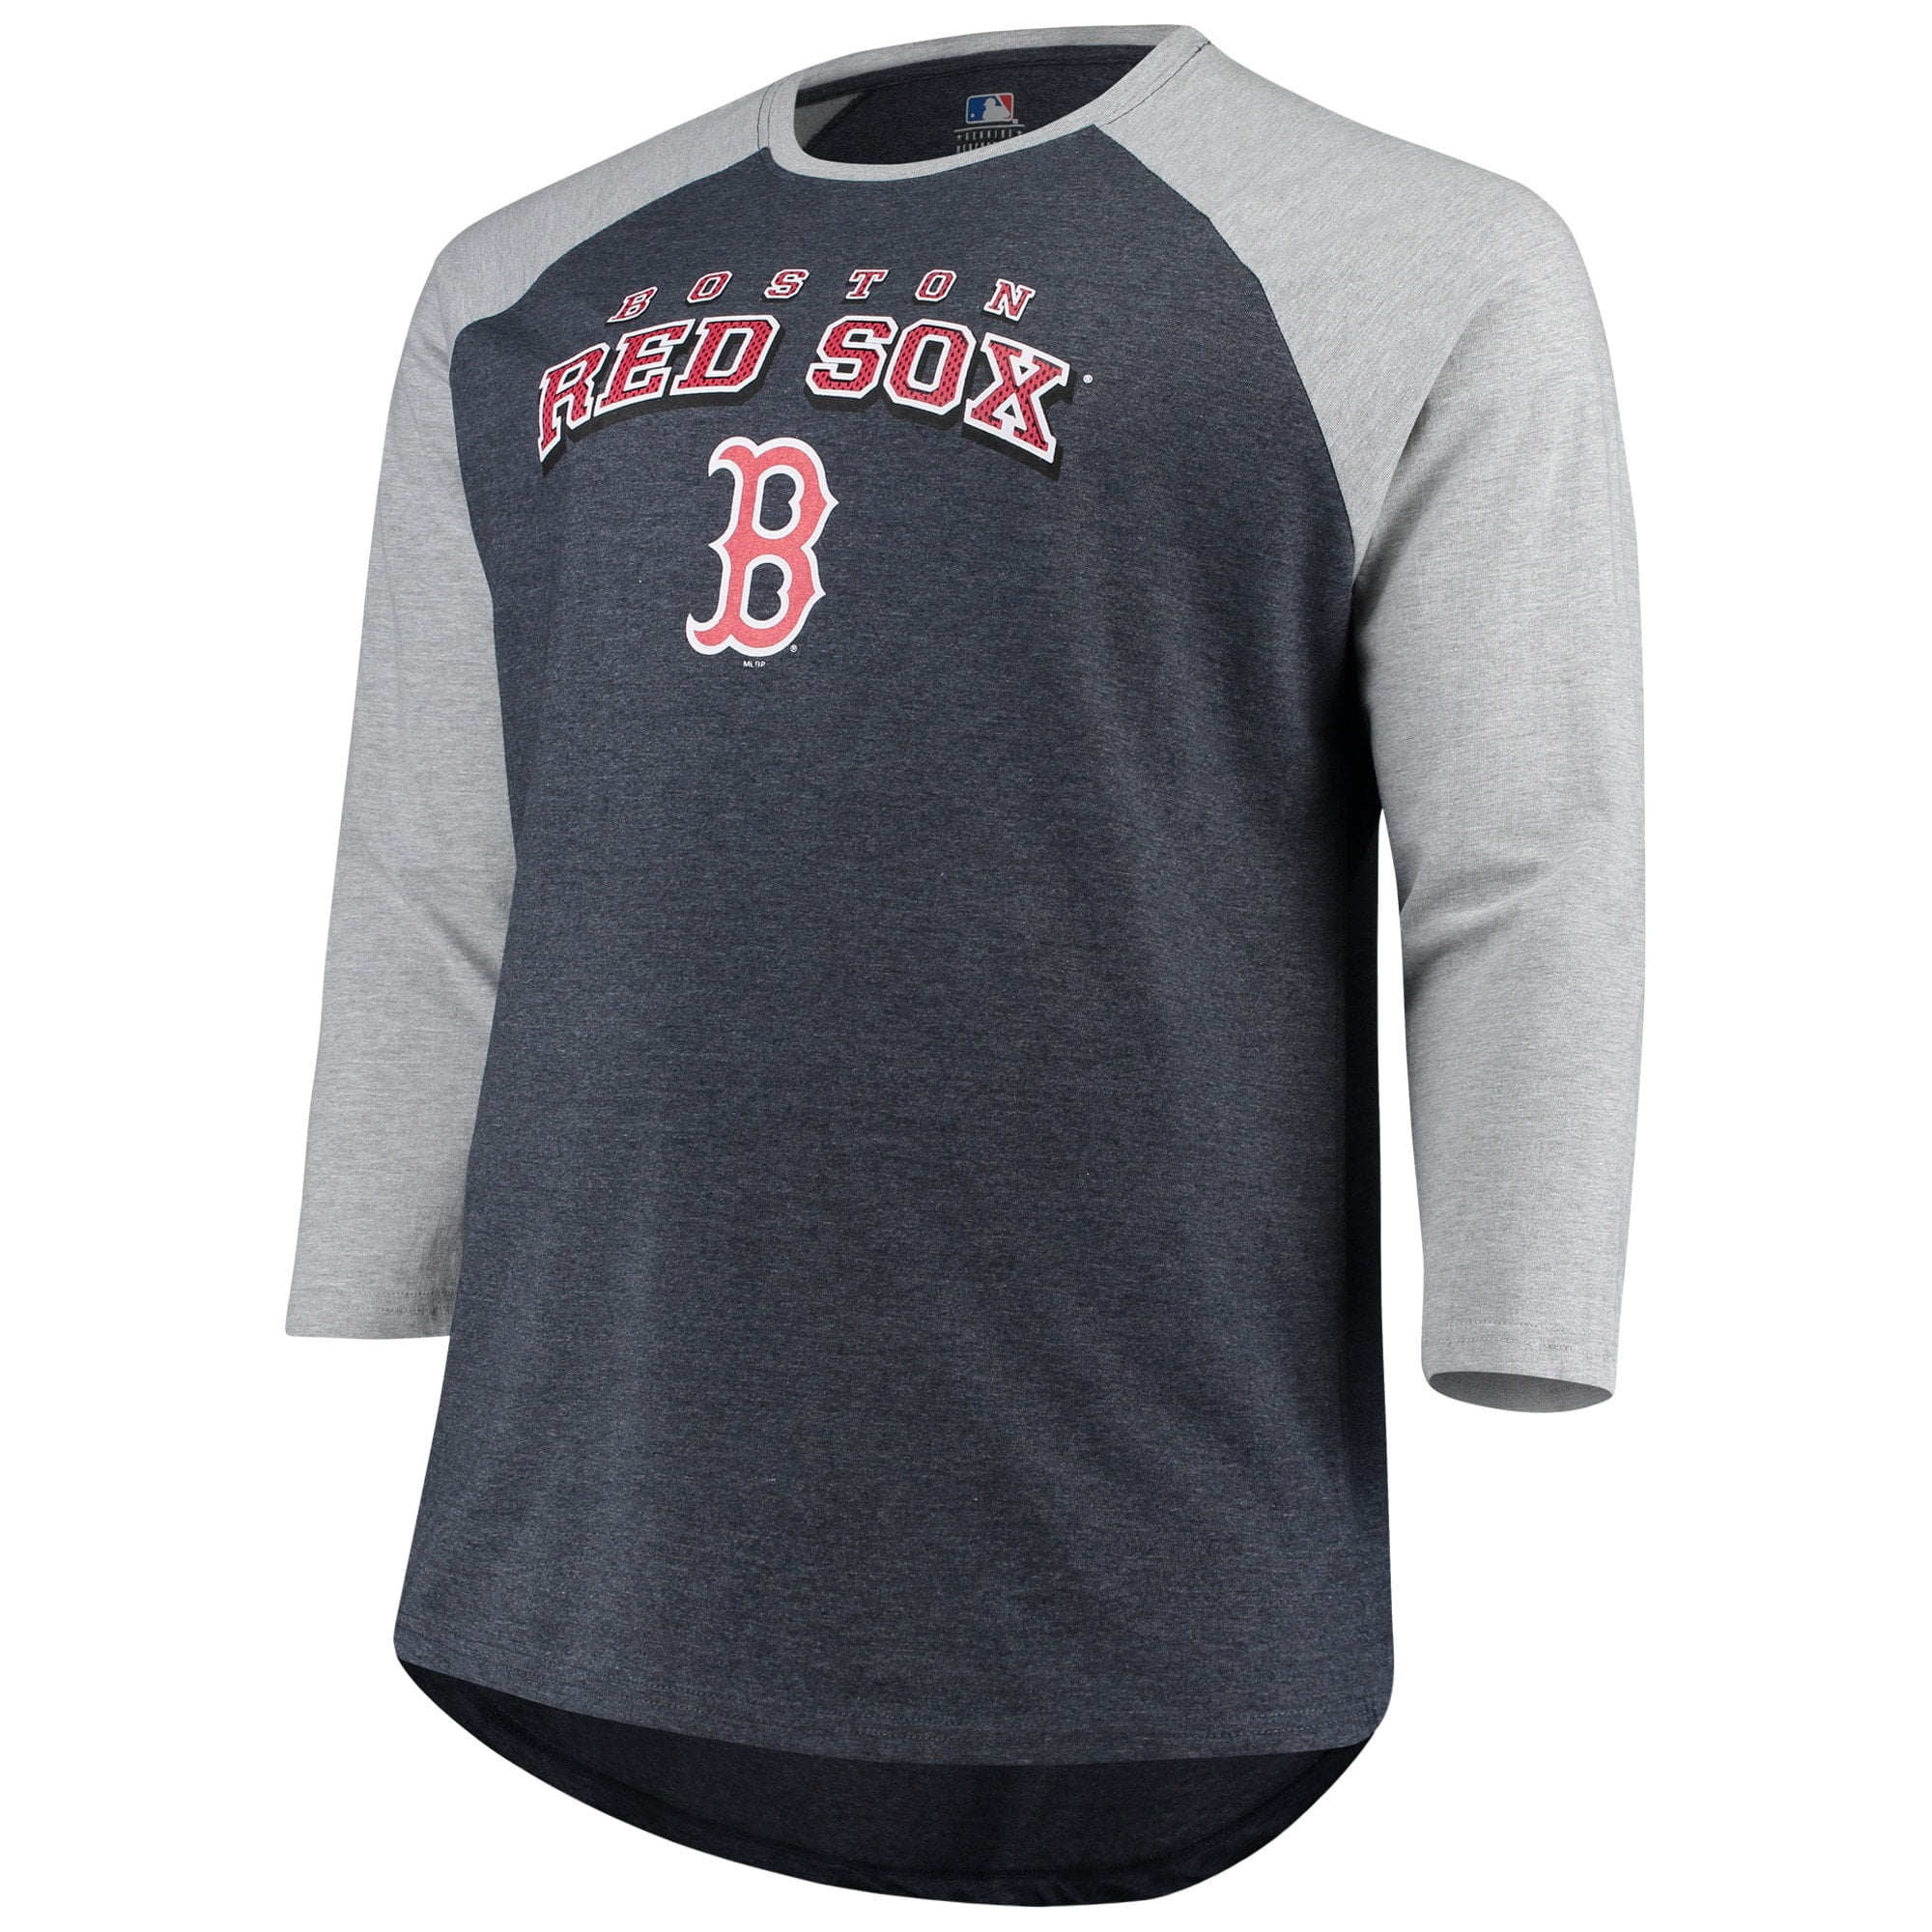 Men's Majestic Navy/Heathered Gray Boston Red Sox Big & Tall Strength ...